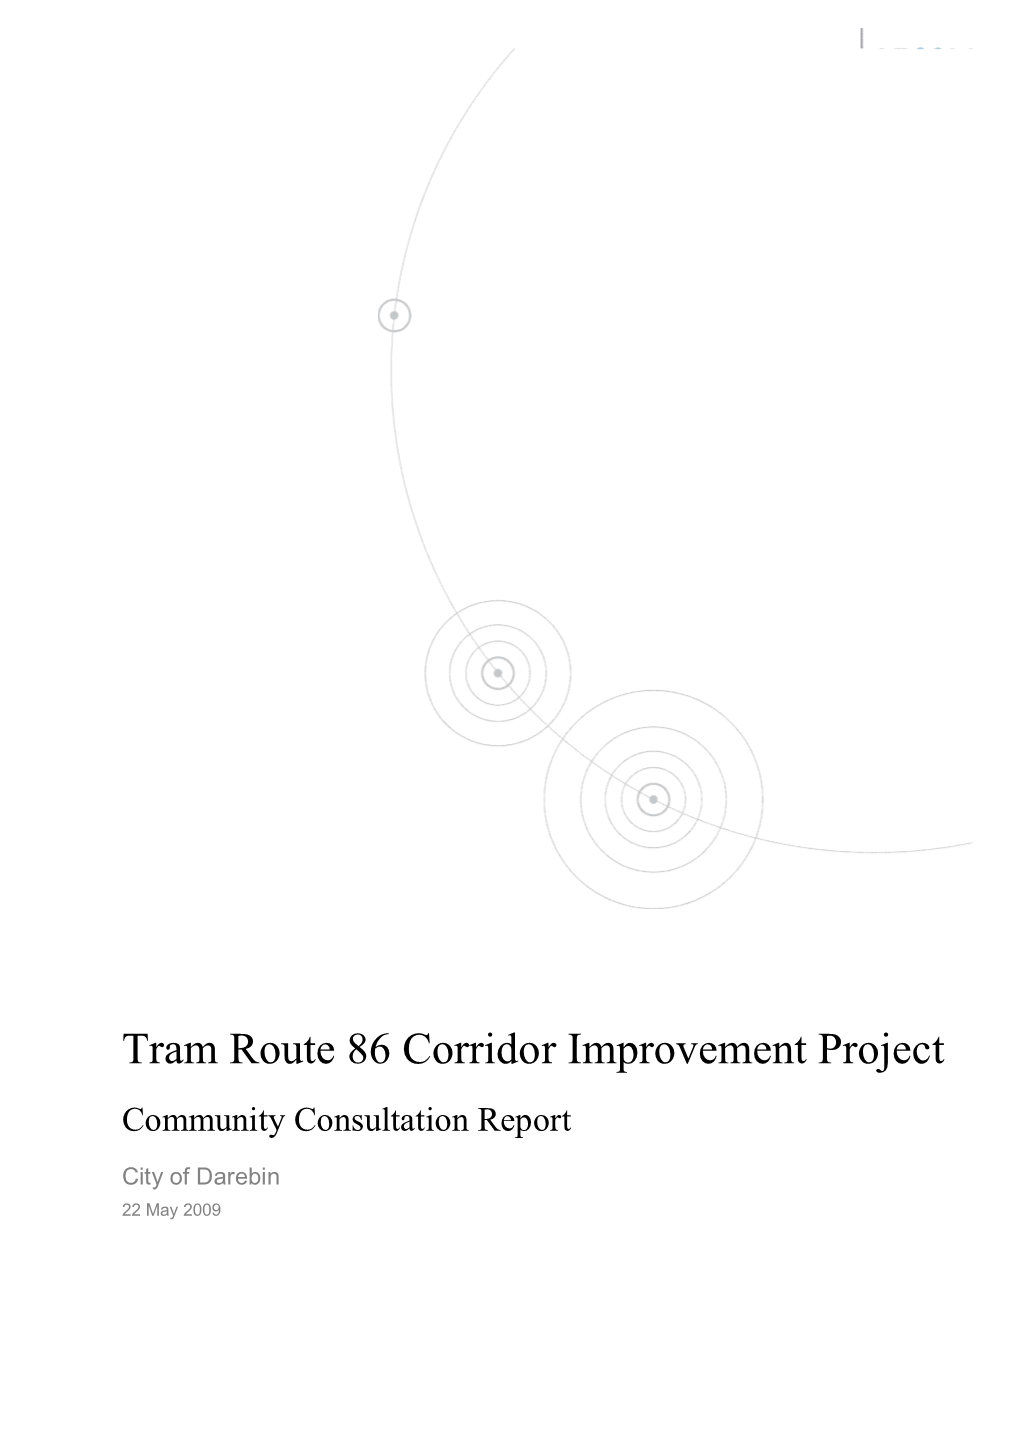 Tram Route 86 Corridor Improvement Project Community Consultation Report